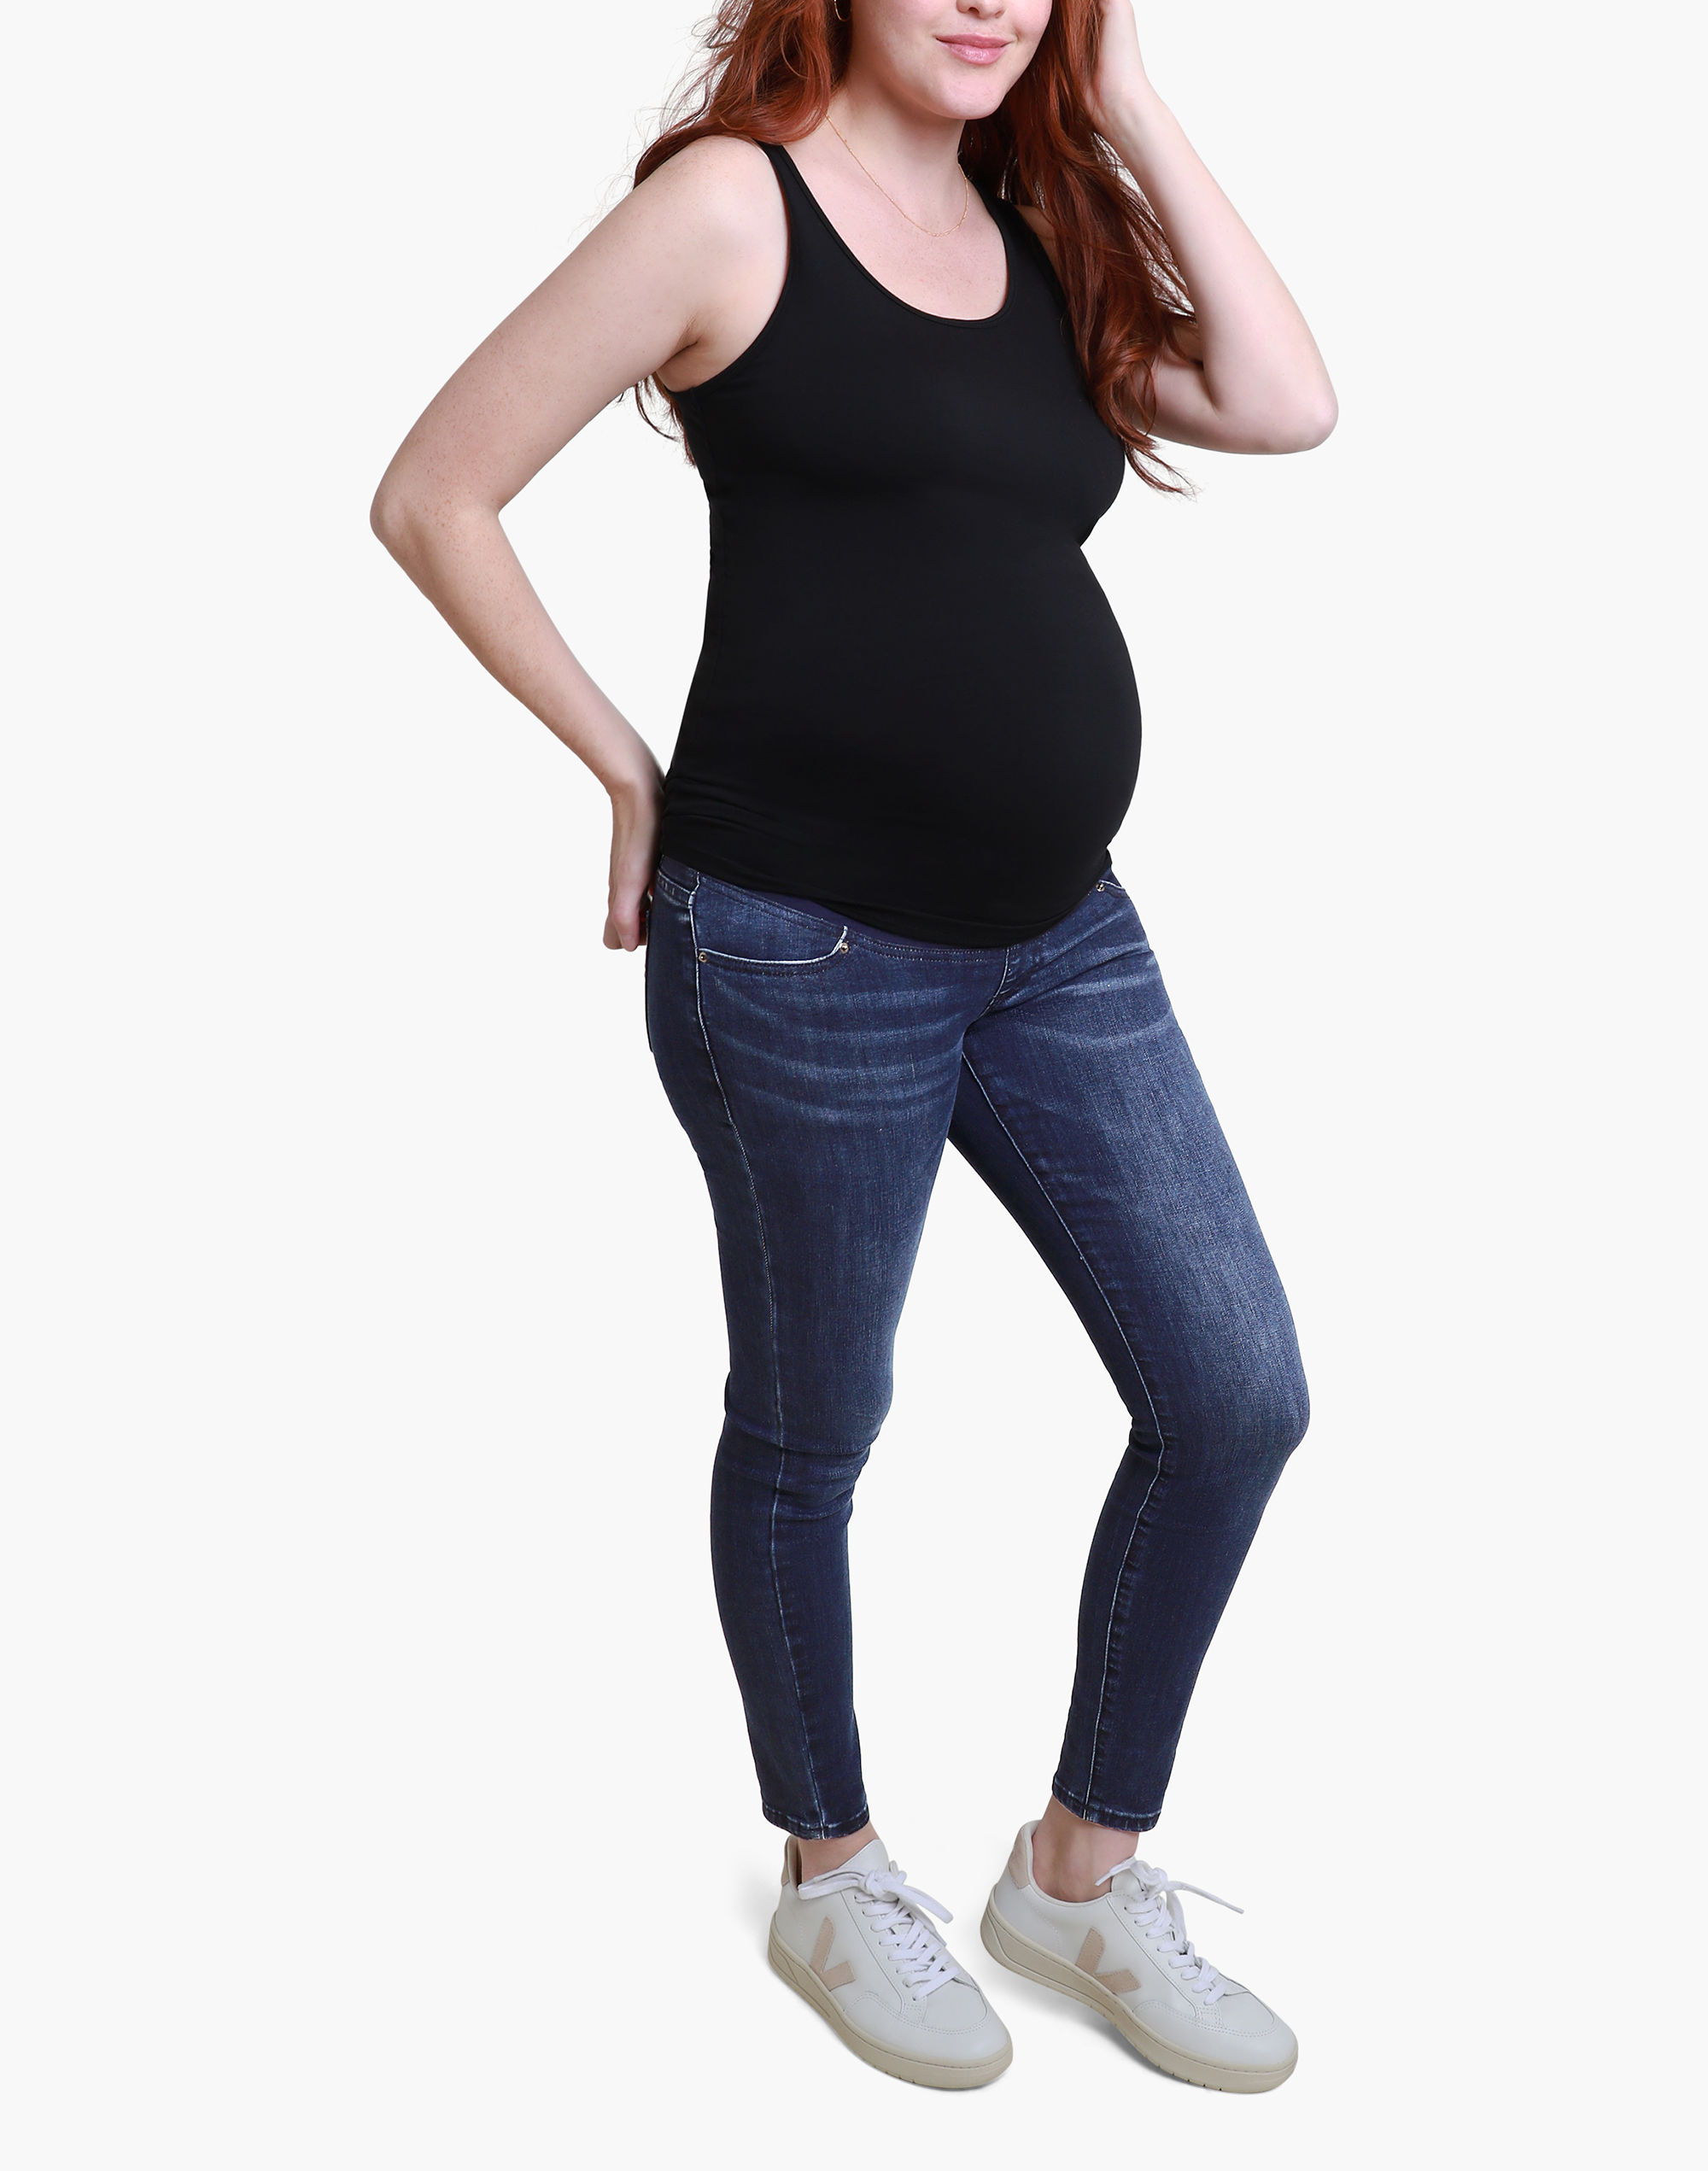 Long Sleeve Scoop Neck Maternity T-Shirt - Isabel Maternity by Ingrid &  Isabel™ White XL